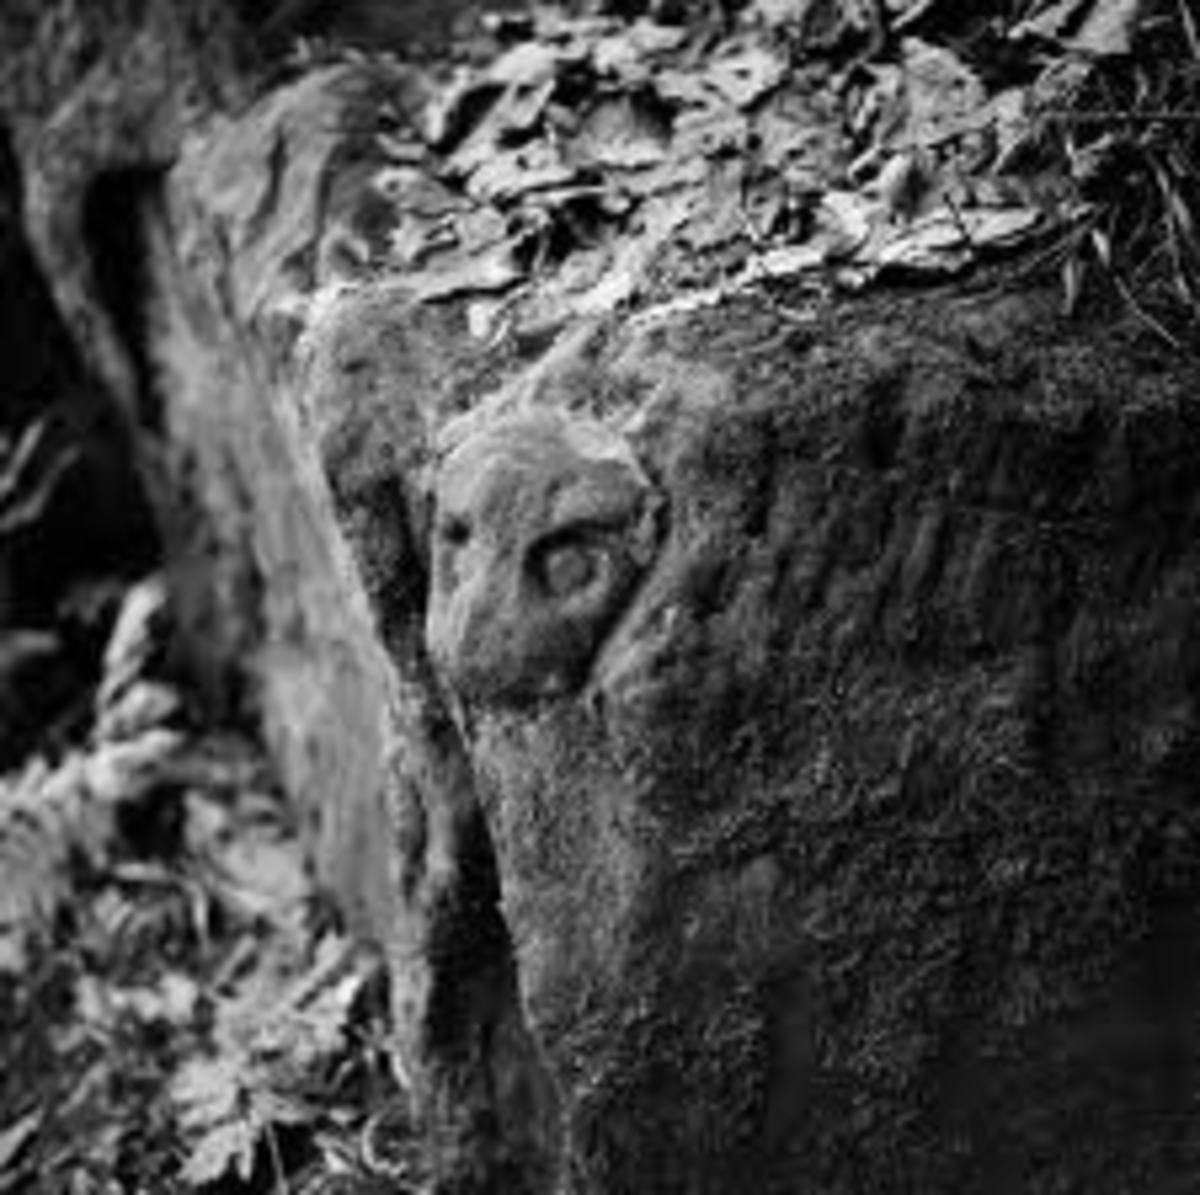 roslin-glen-ancient-rock-carvings